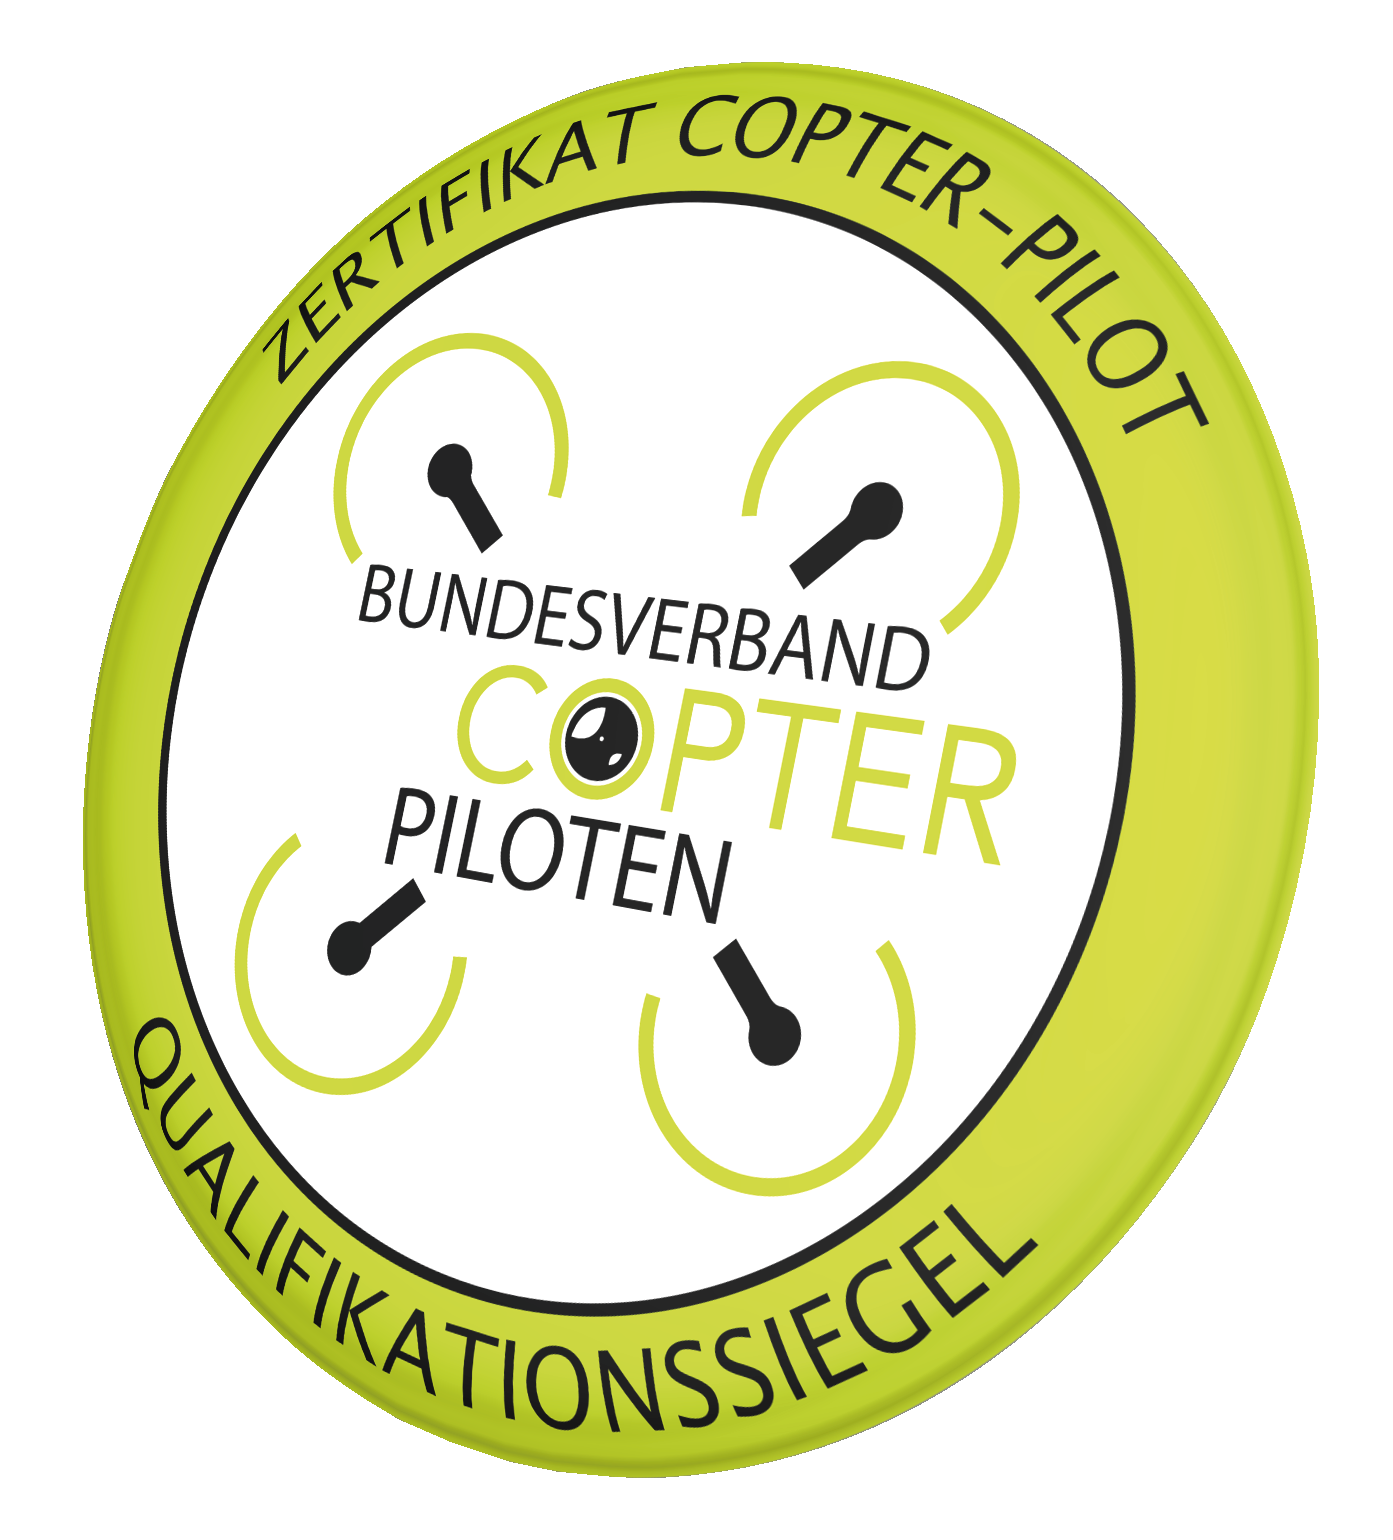 BVCP-Zertifikat Copter-Piloten